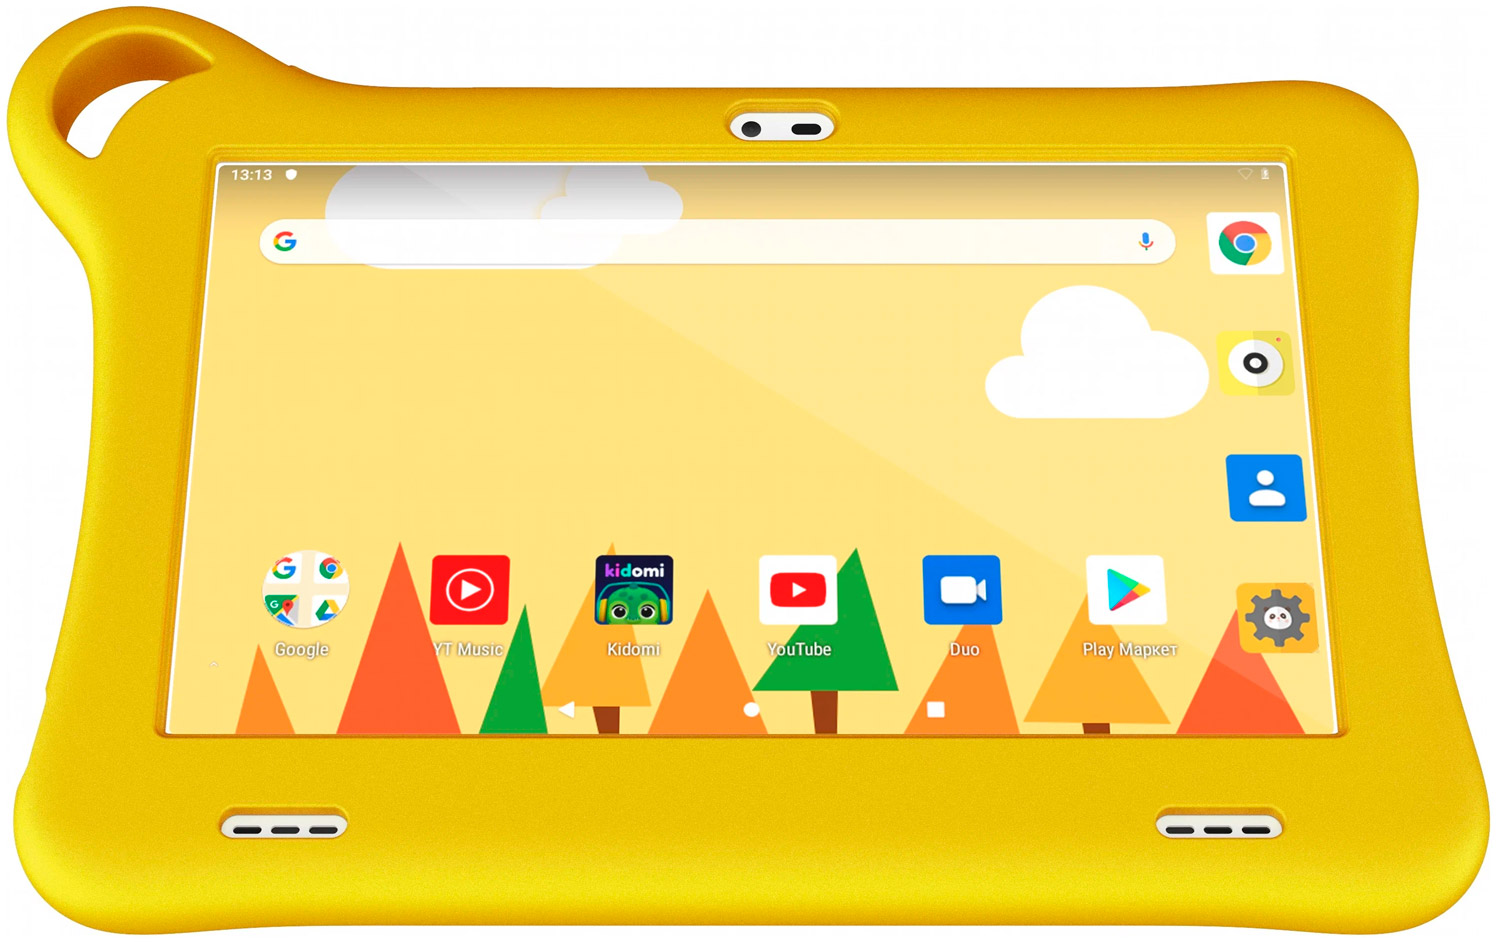 Планшет Alcatel Tkee Mini 2 YELLOW+ORANGЕ/желтый+оранжевый планшет alcatel tkee mini 2 9317g 32gb мятный желтый 9317g 2ealru2